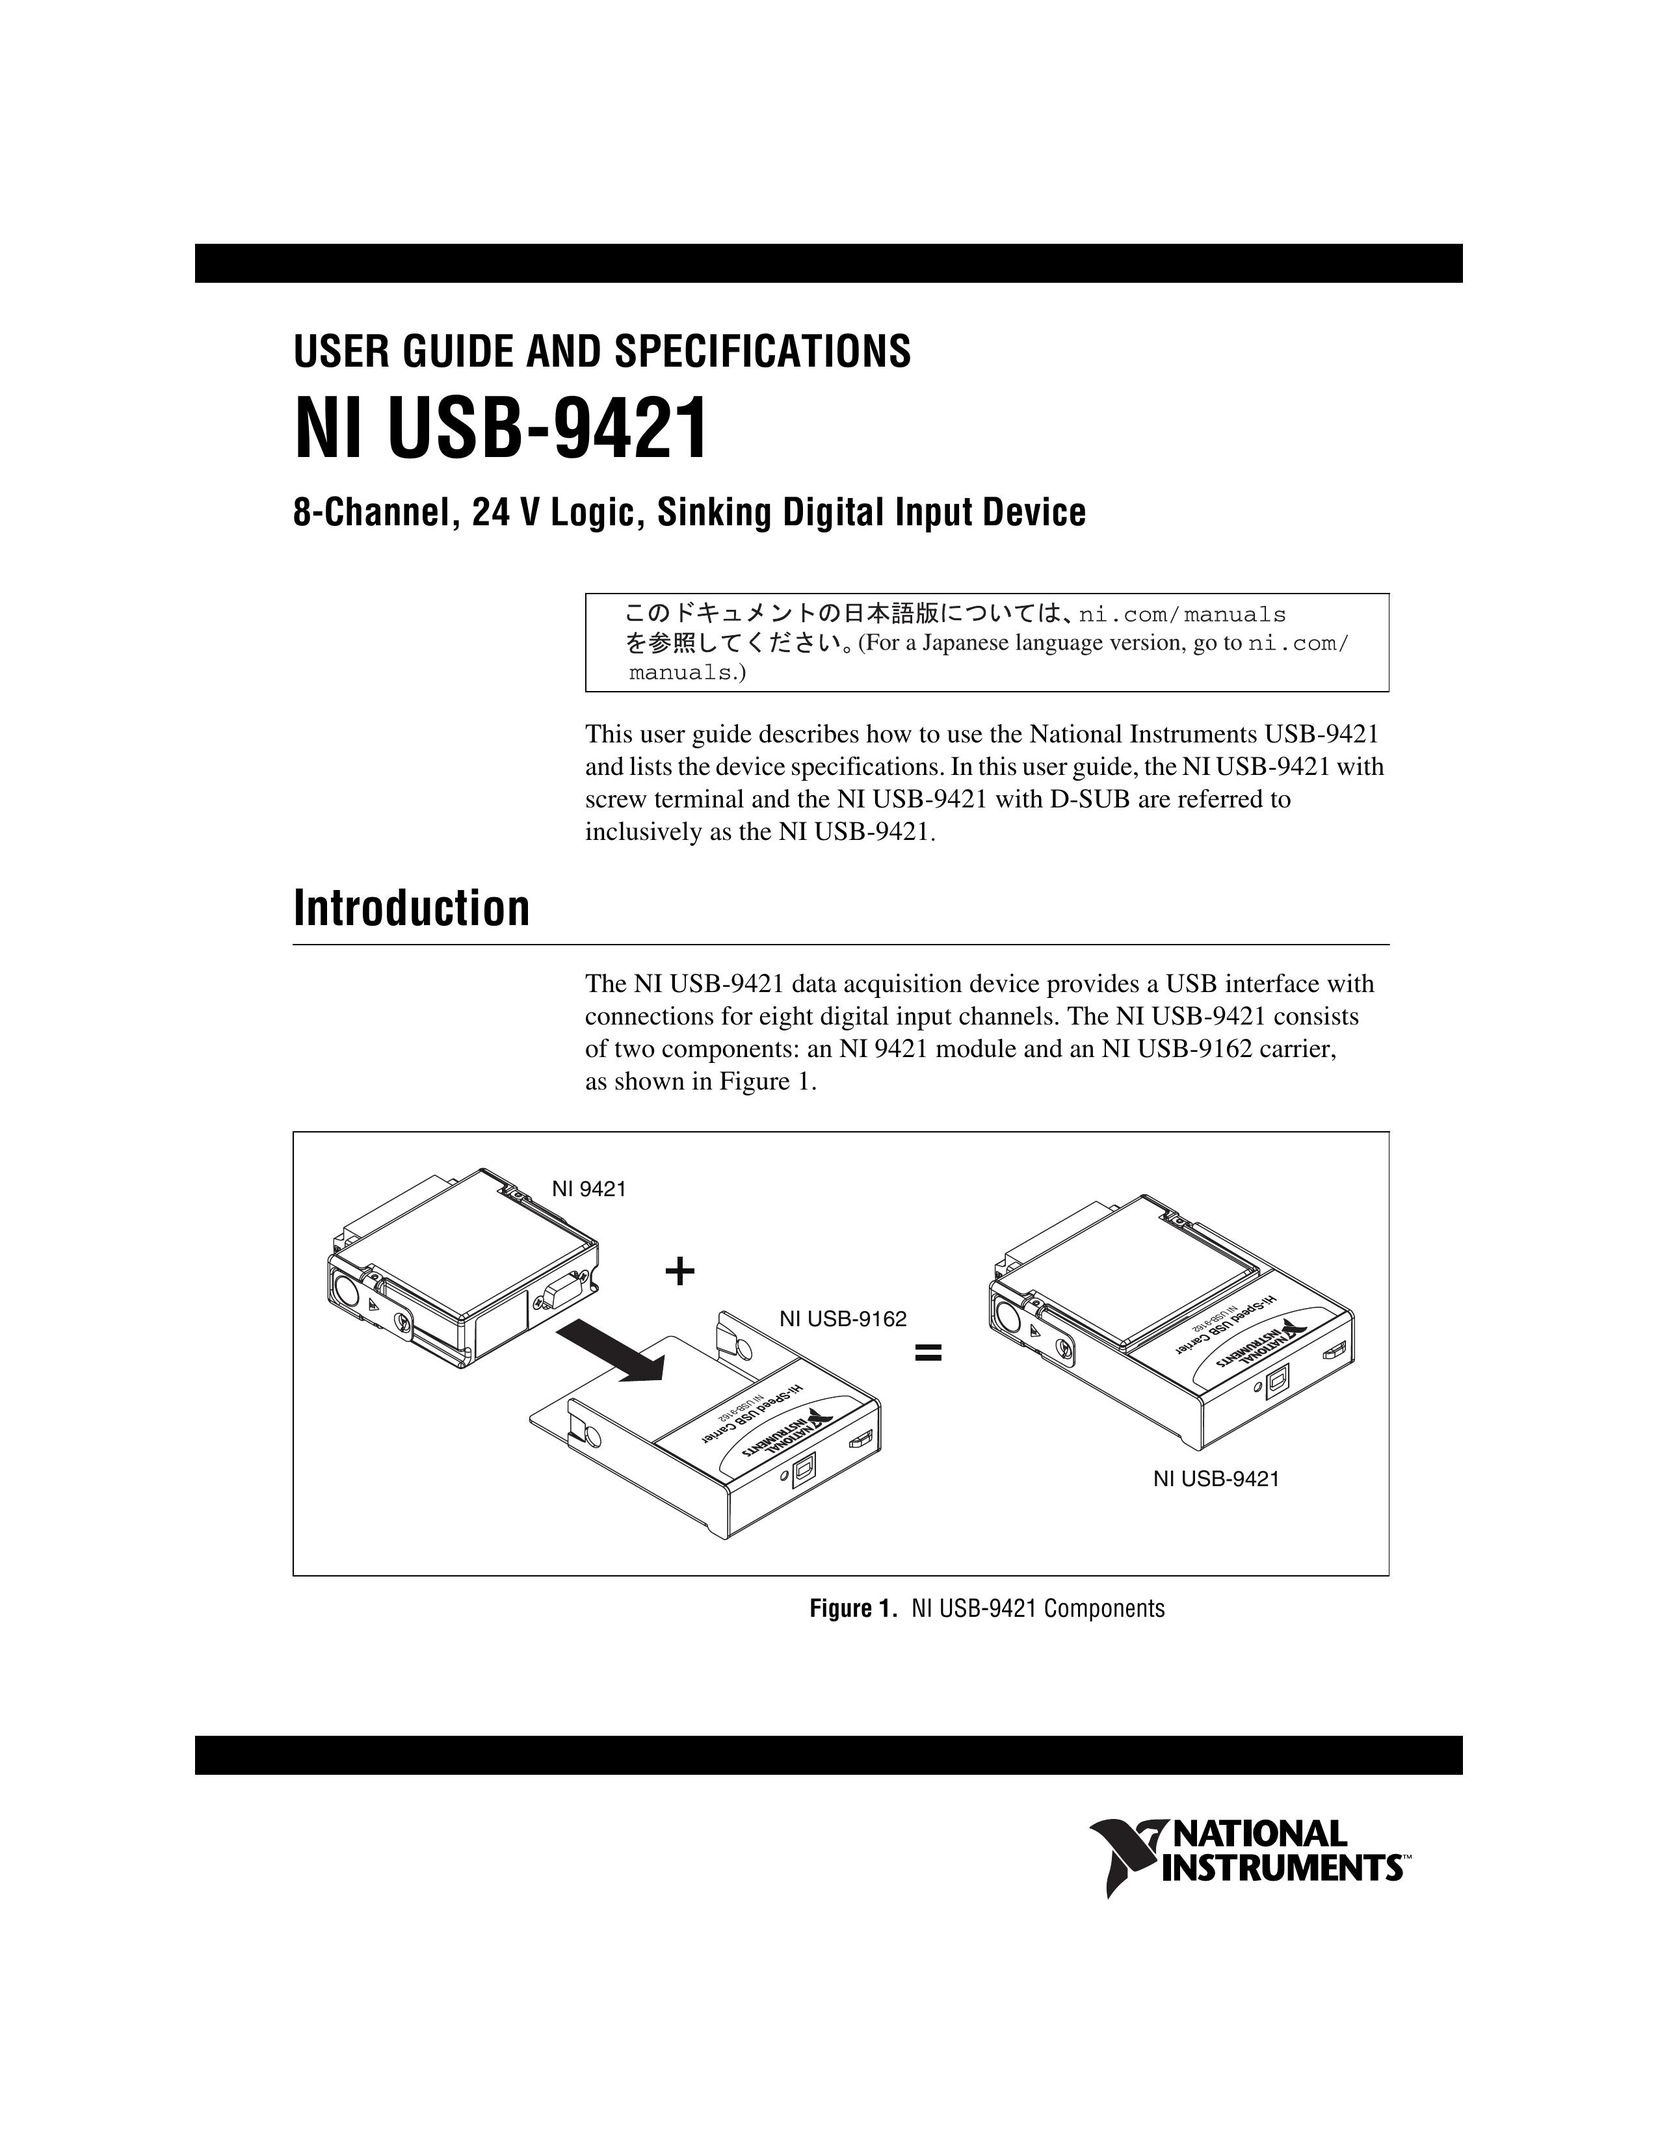 National Instruments NI USB-9421 Computer Hardware User Manual